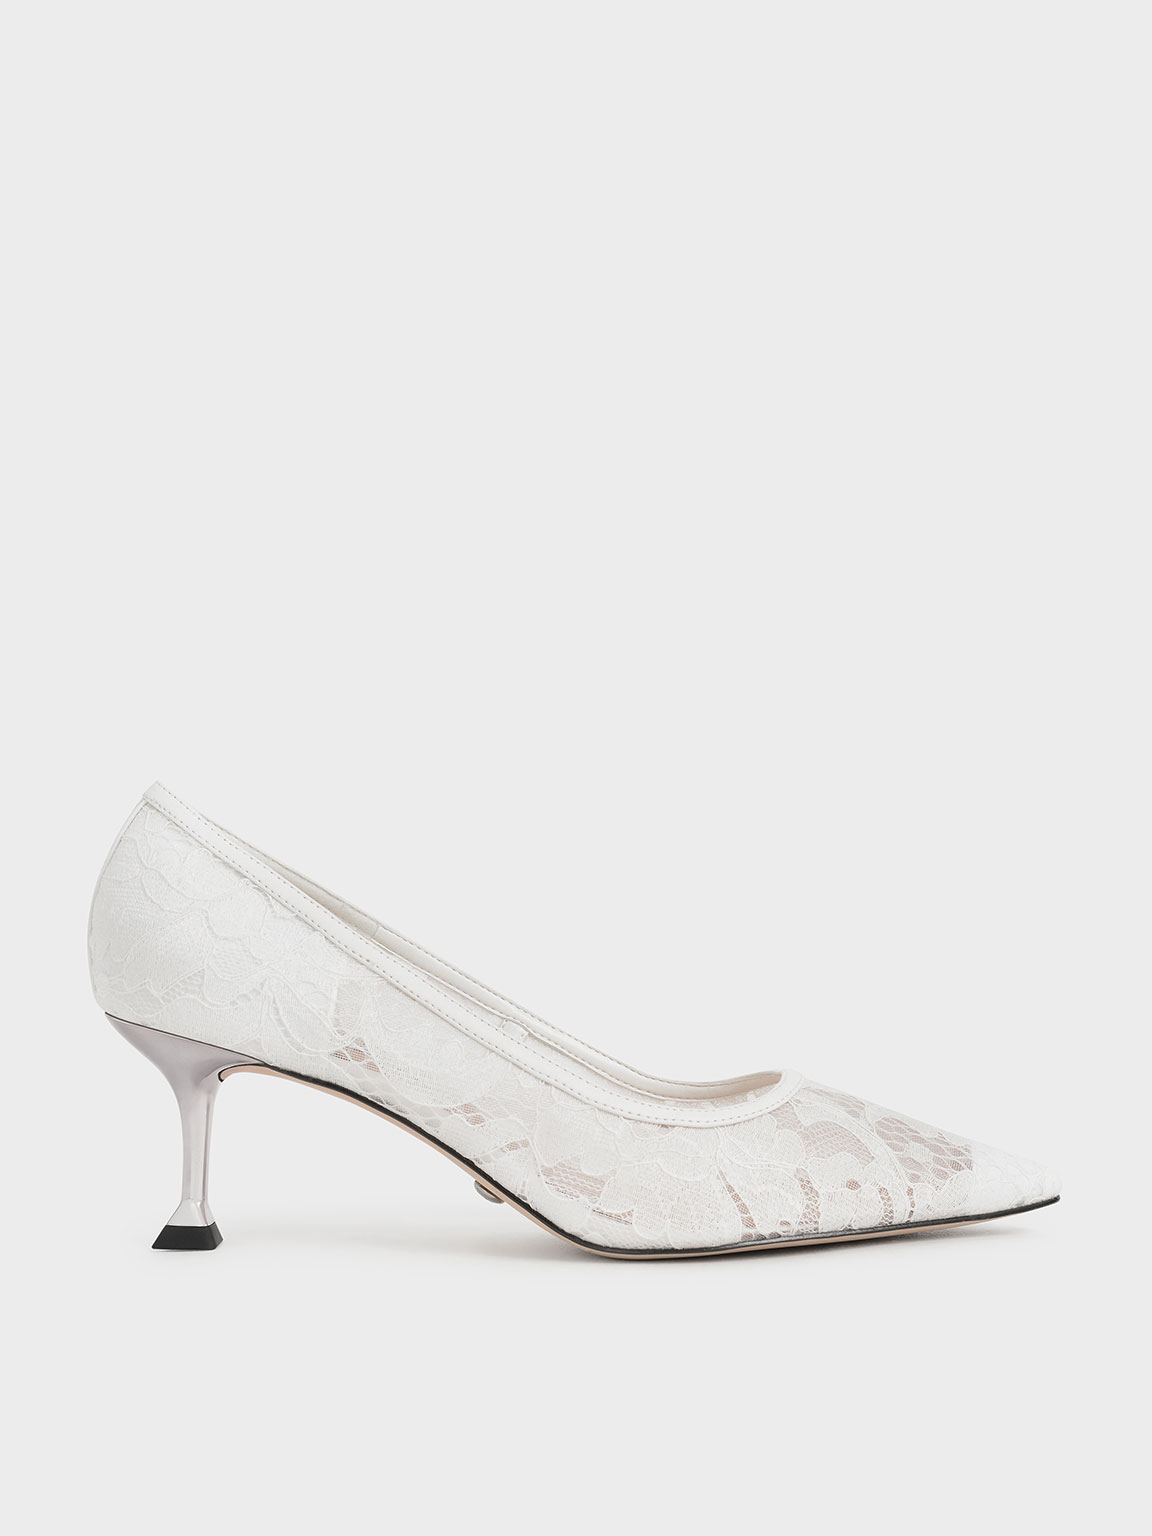 VELEGO Heels for feet Women Stiletto Pointed White High Heel Sandals  Elegant Sweet Shoes Banquet (Color : White, Size : 39 EU) : Buy Online at  Best Price in KSA - Souq